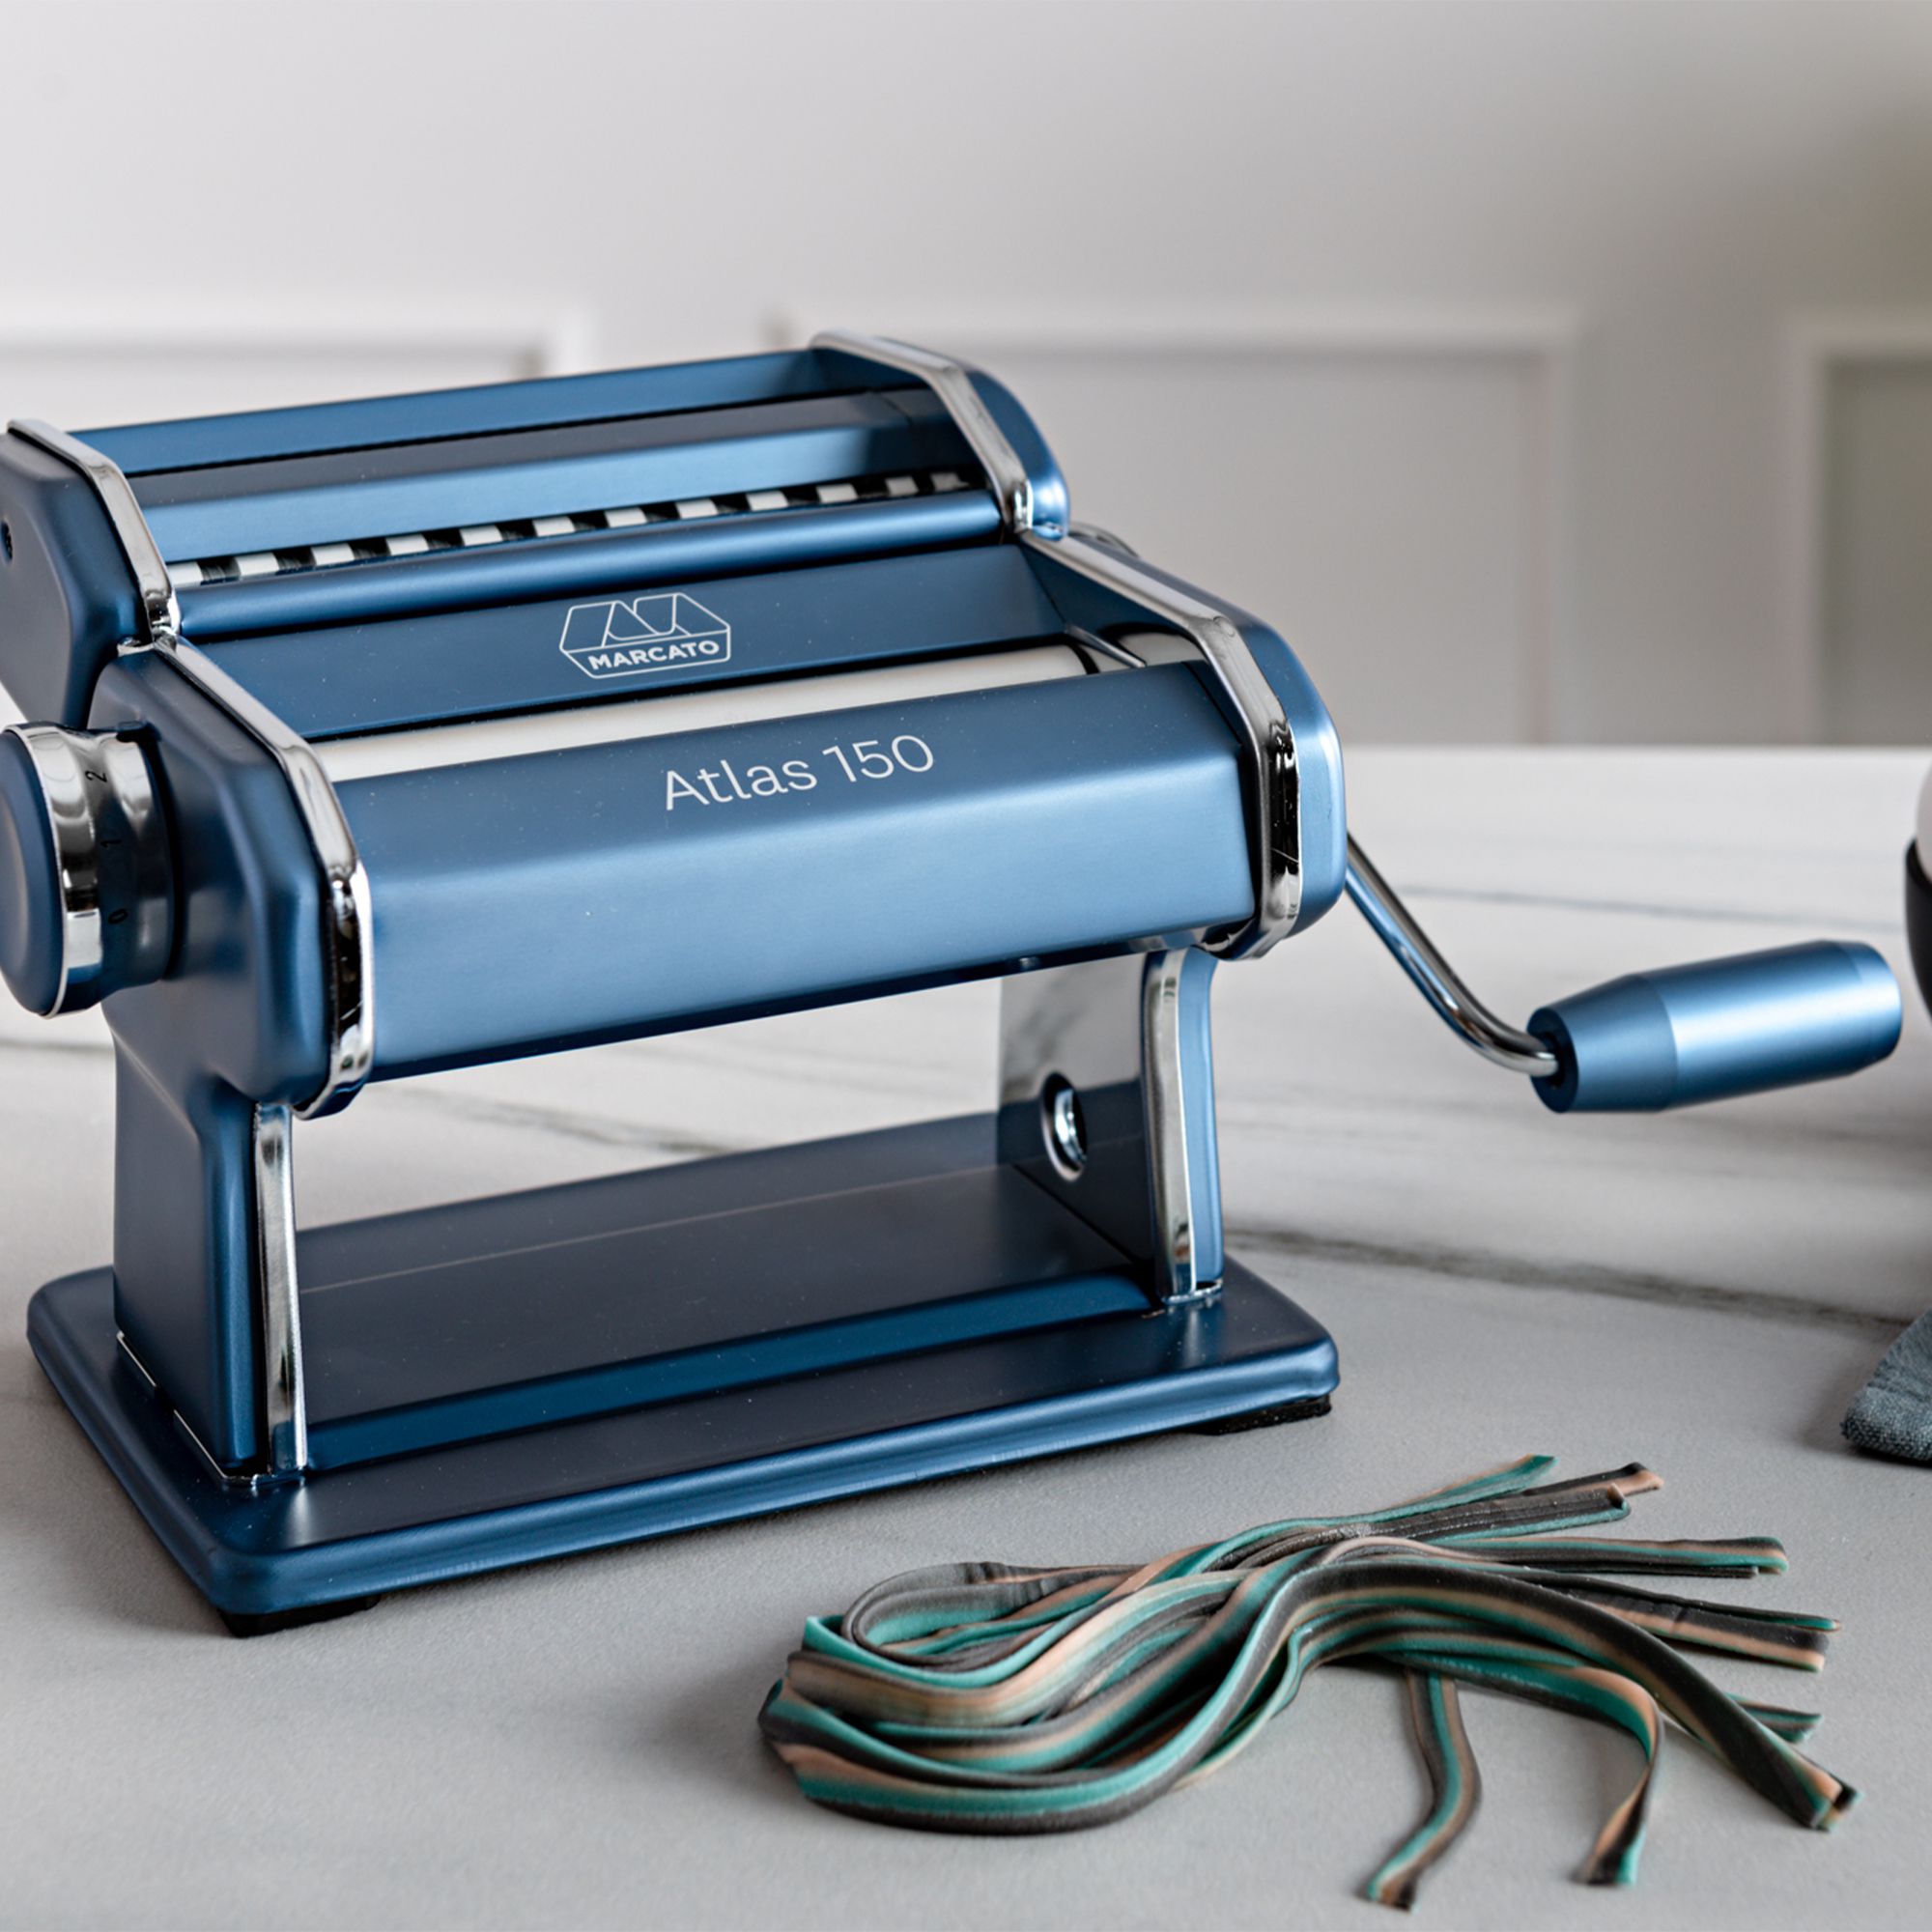 Marcato - Pasta machine "Atlas 150 Design" Powder Blue